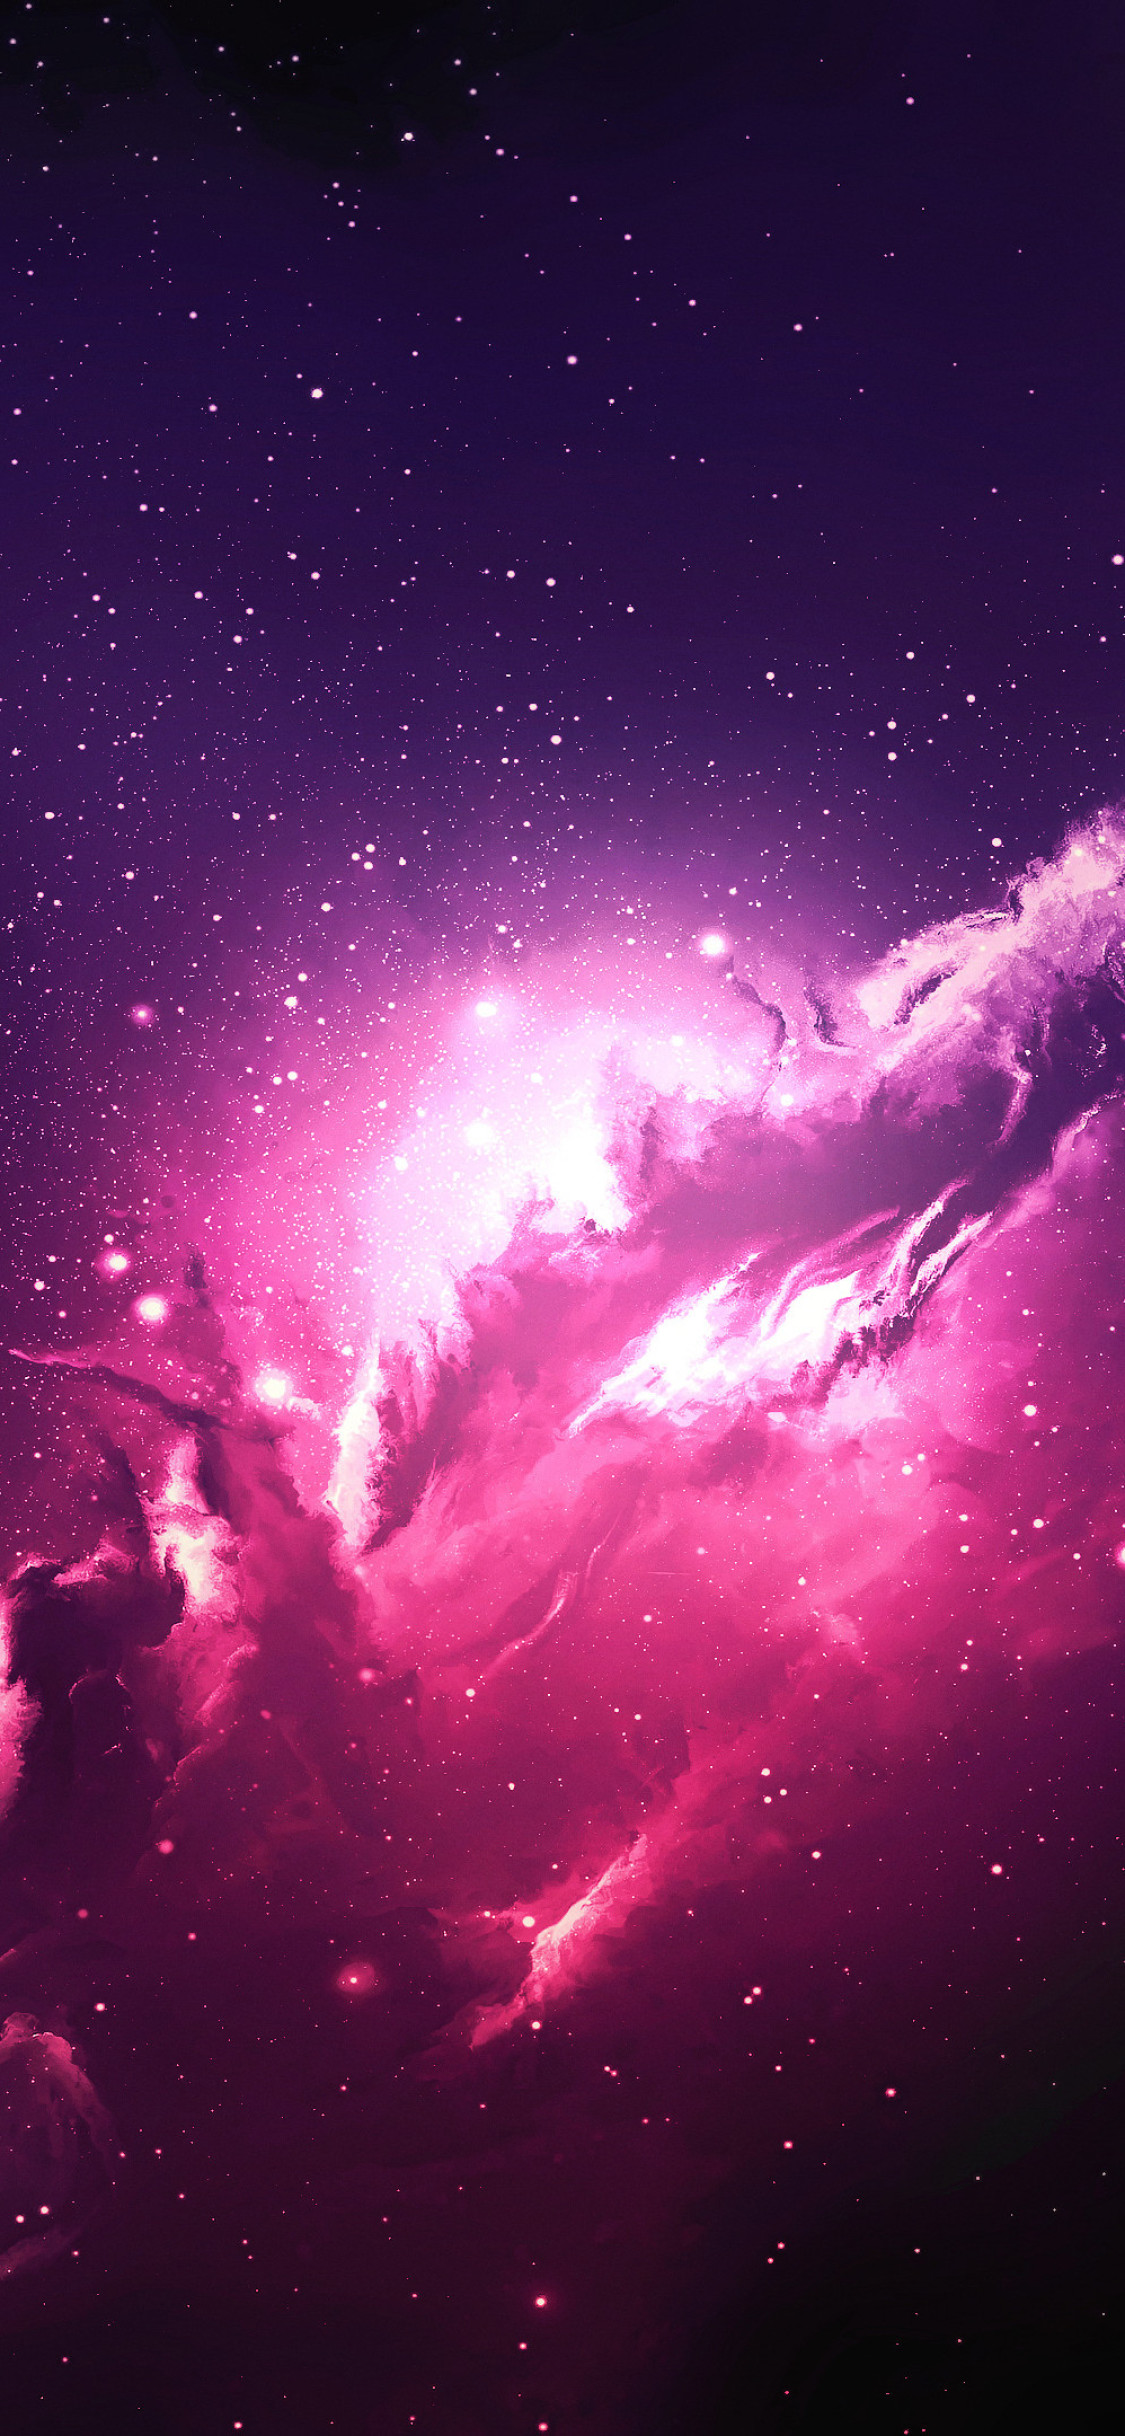 universum wallpaper,himmel,rosa,nebel,atmosphäre,weltraum